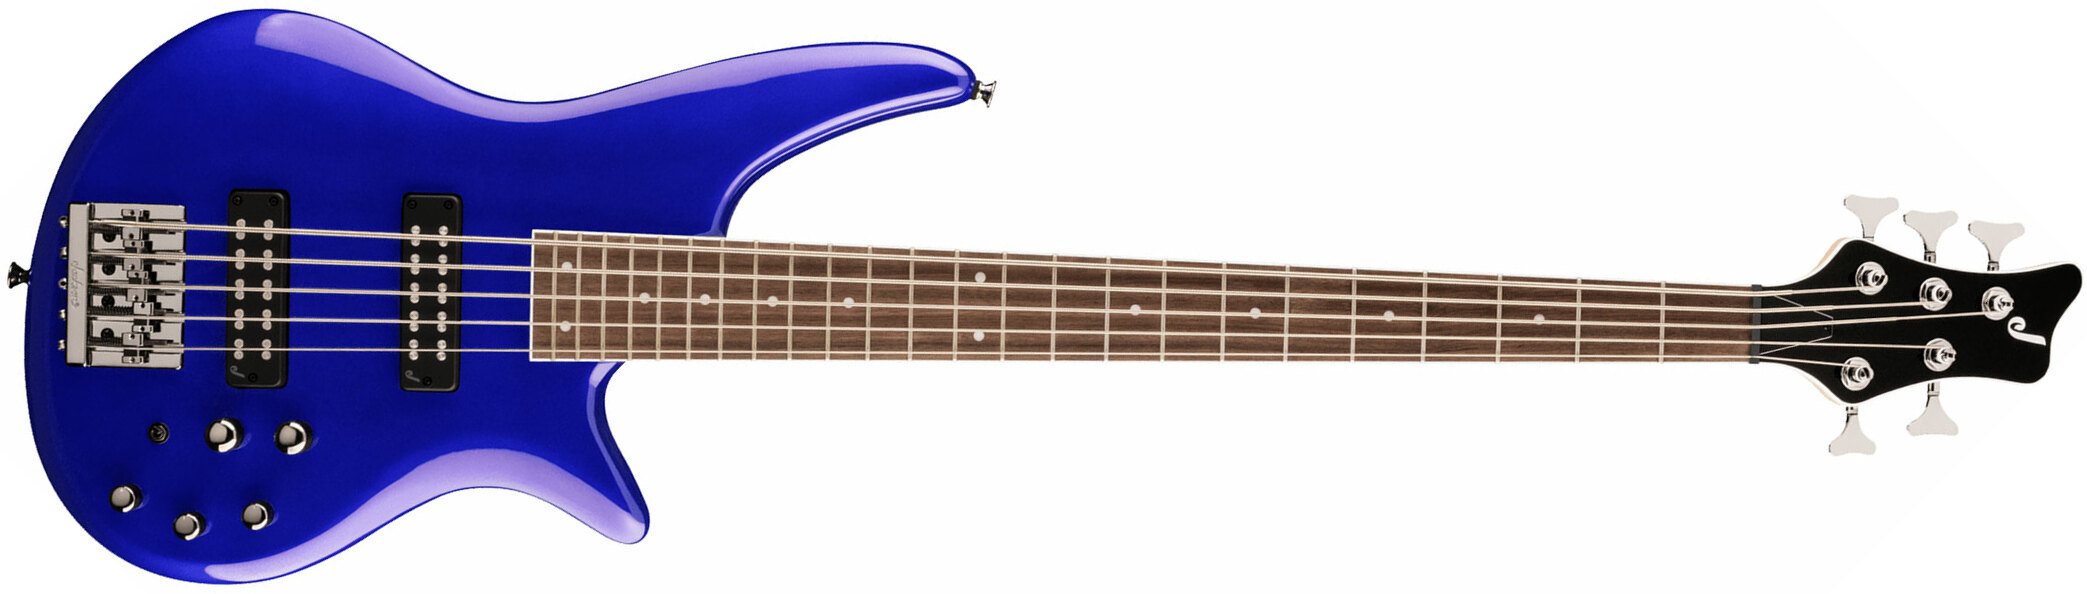 Jackson Spectra Bass Js3v 5c Active Lau - Indigo Blue - Solid body elektrische bas - Main picture